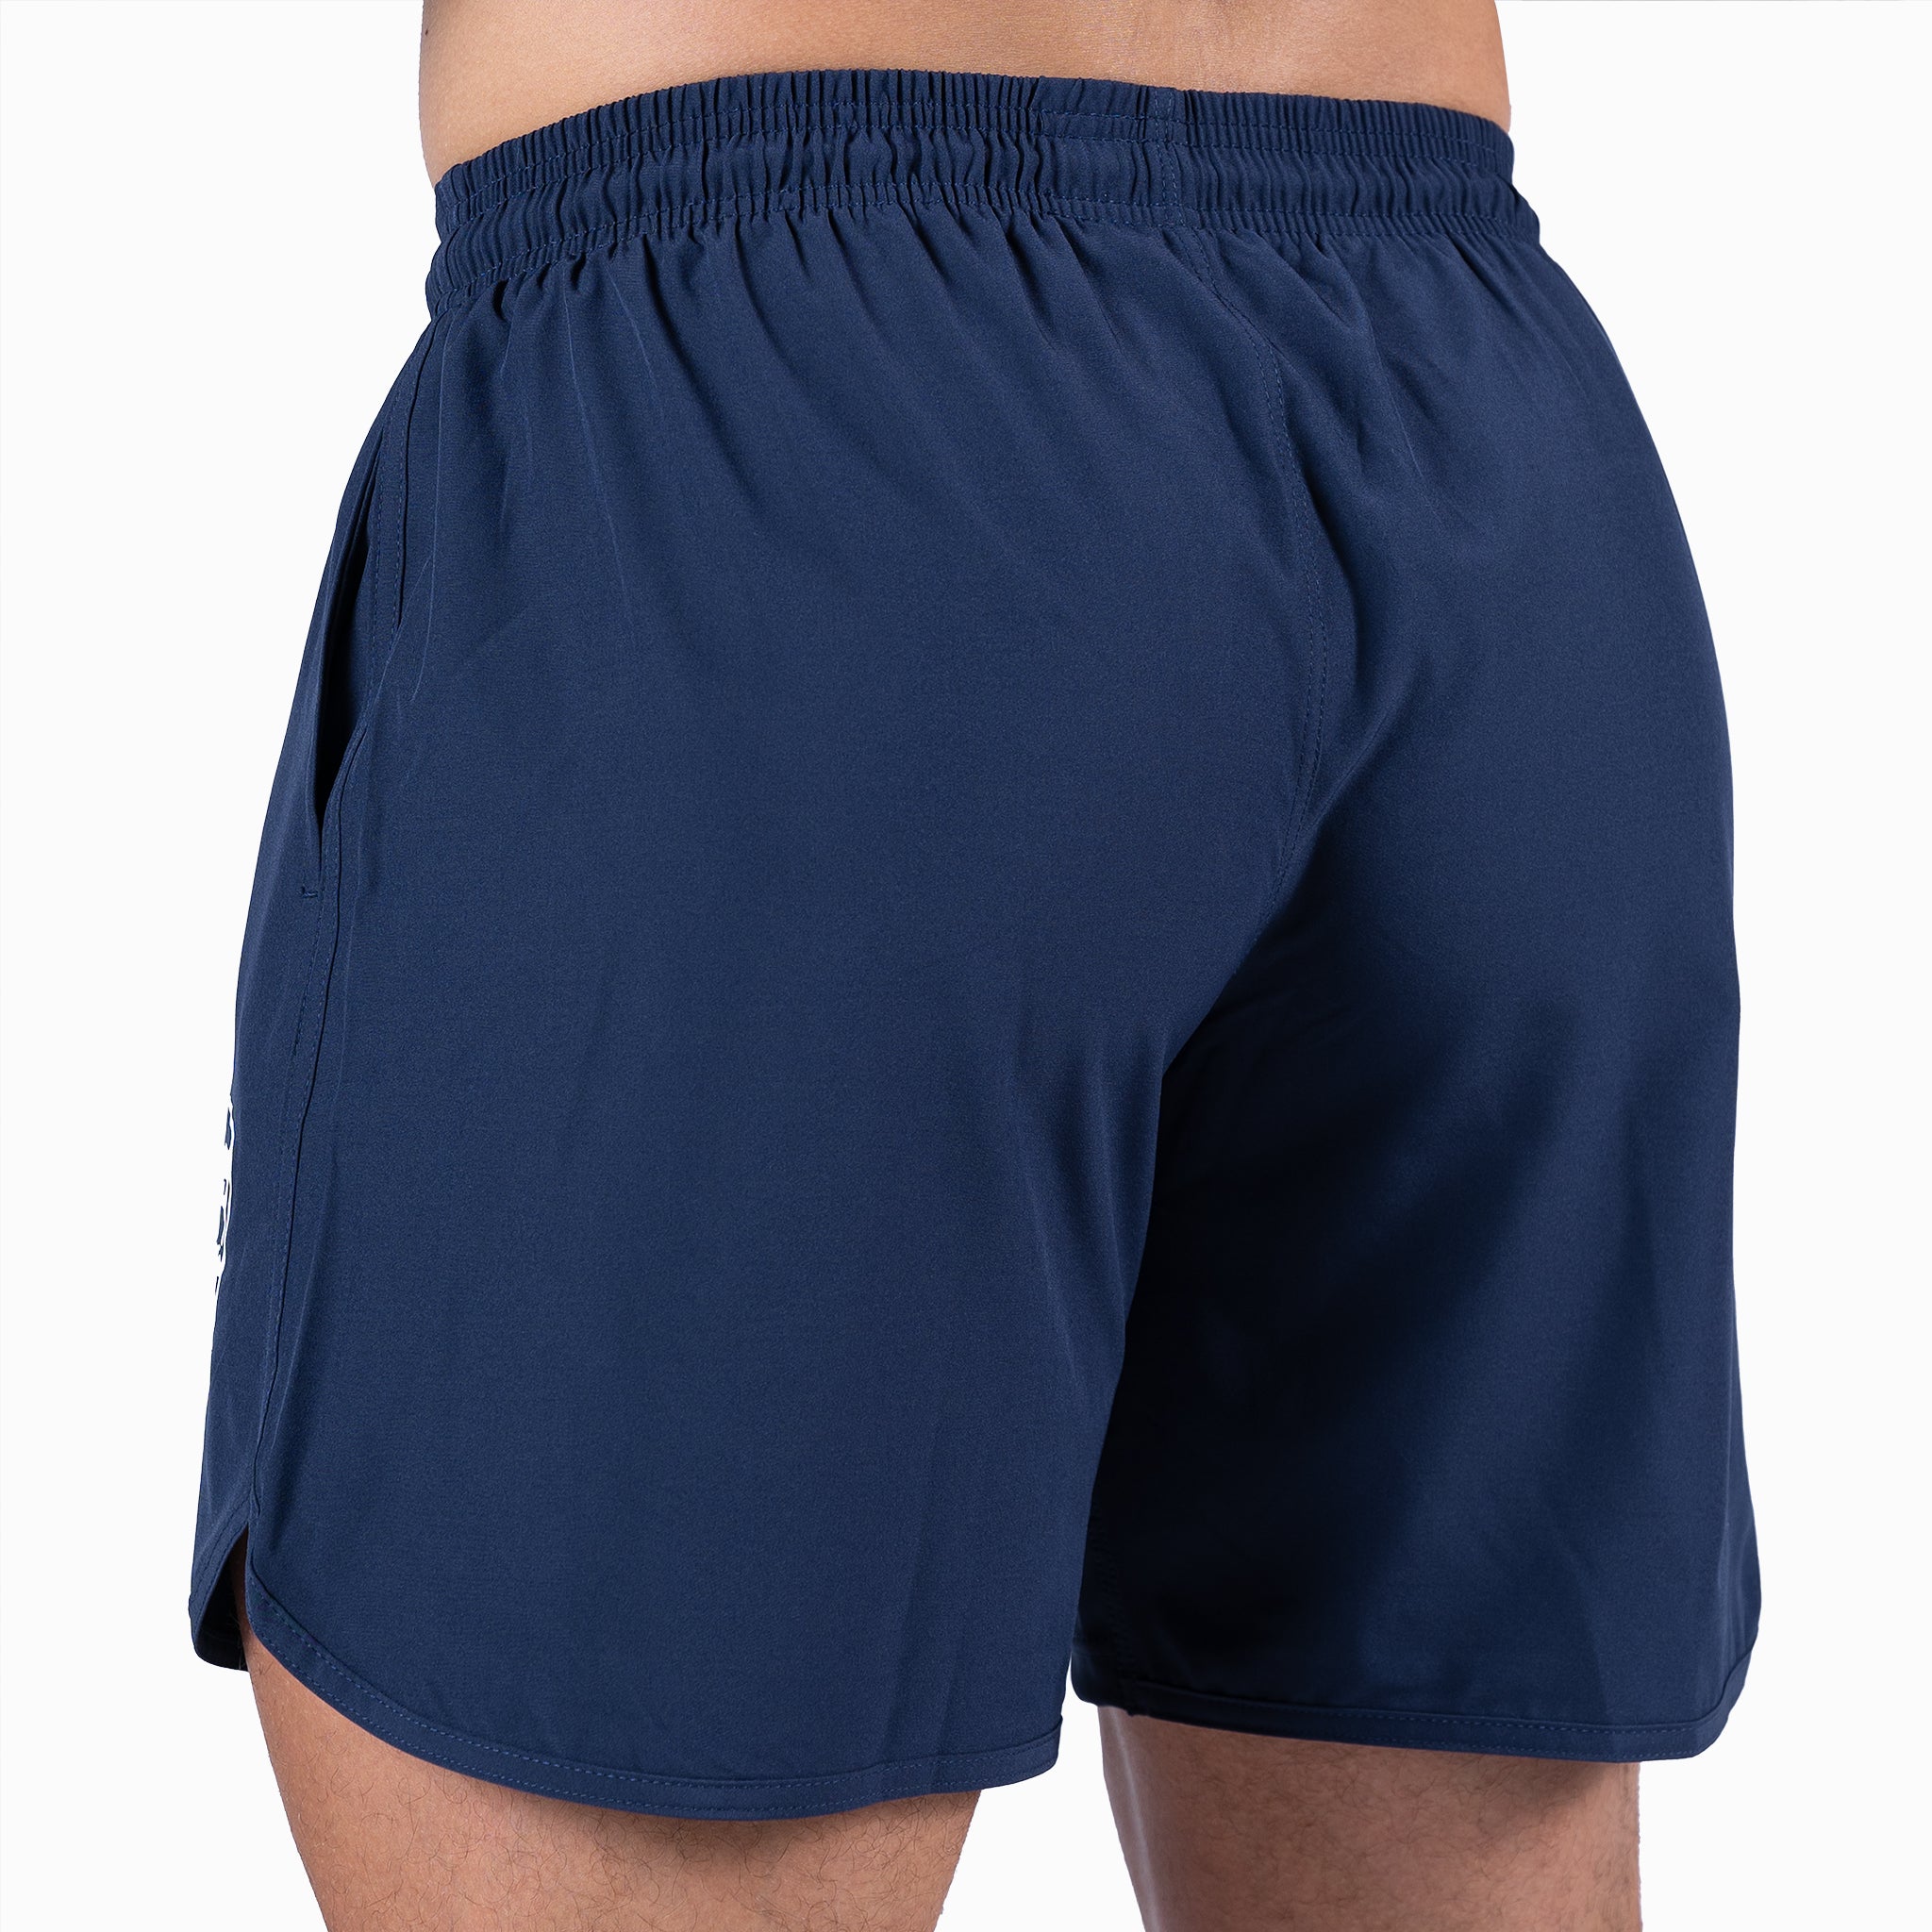 navy training shorts